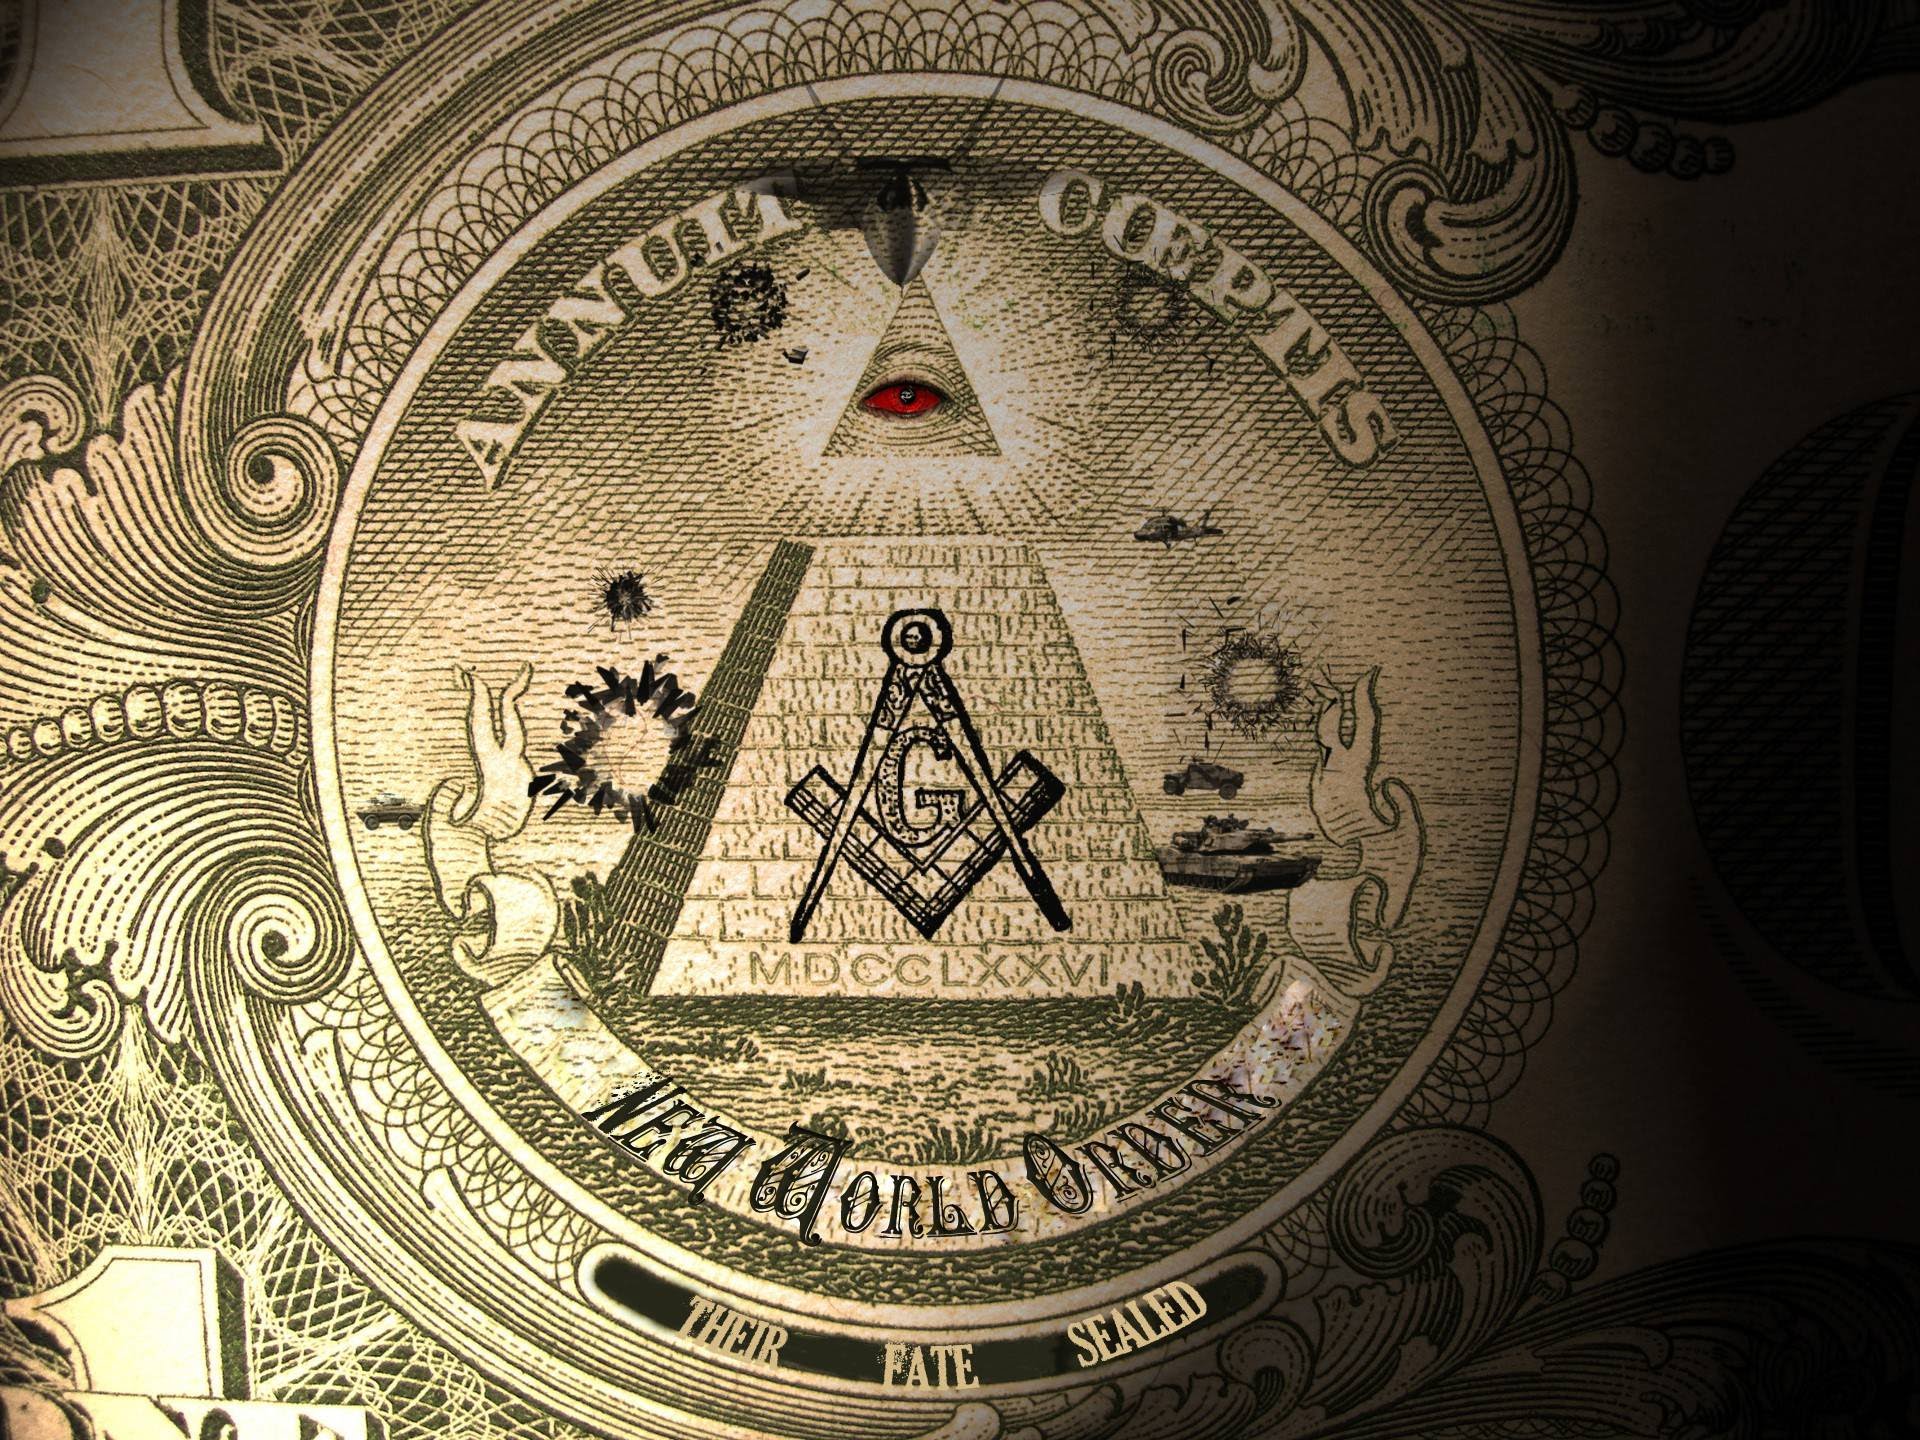 The Ultimate Illuminati Documentary 4/9